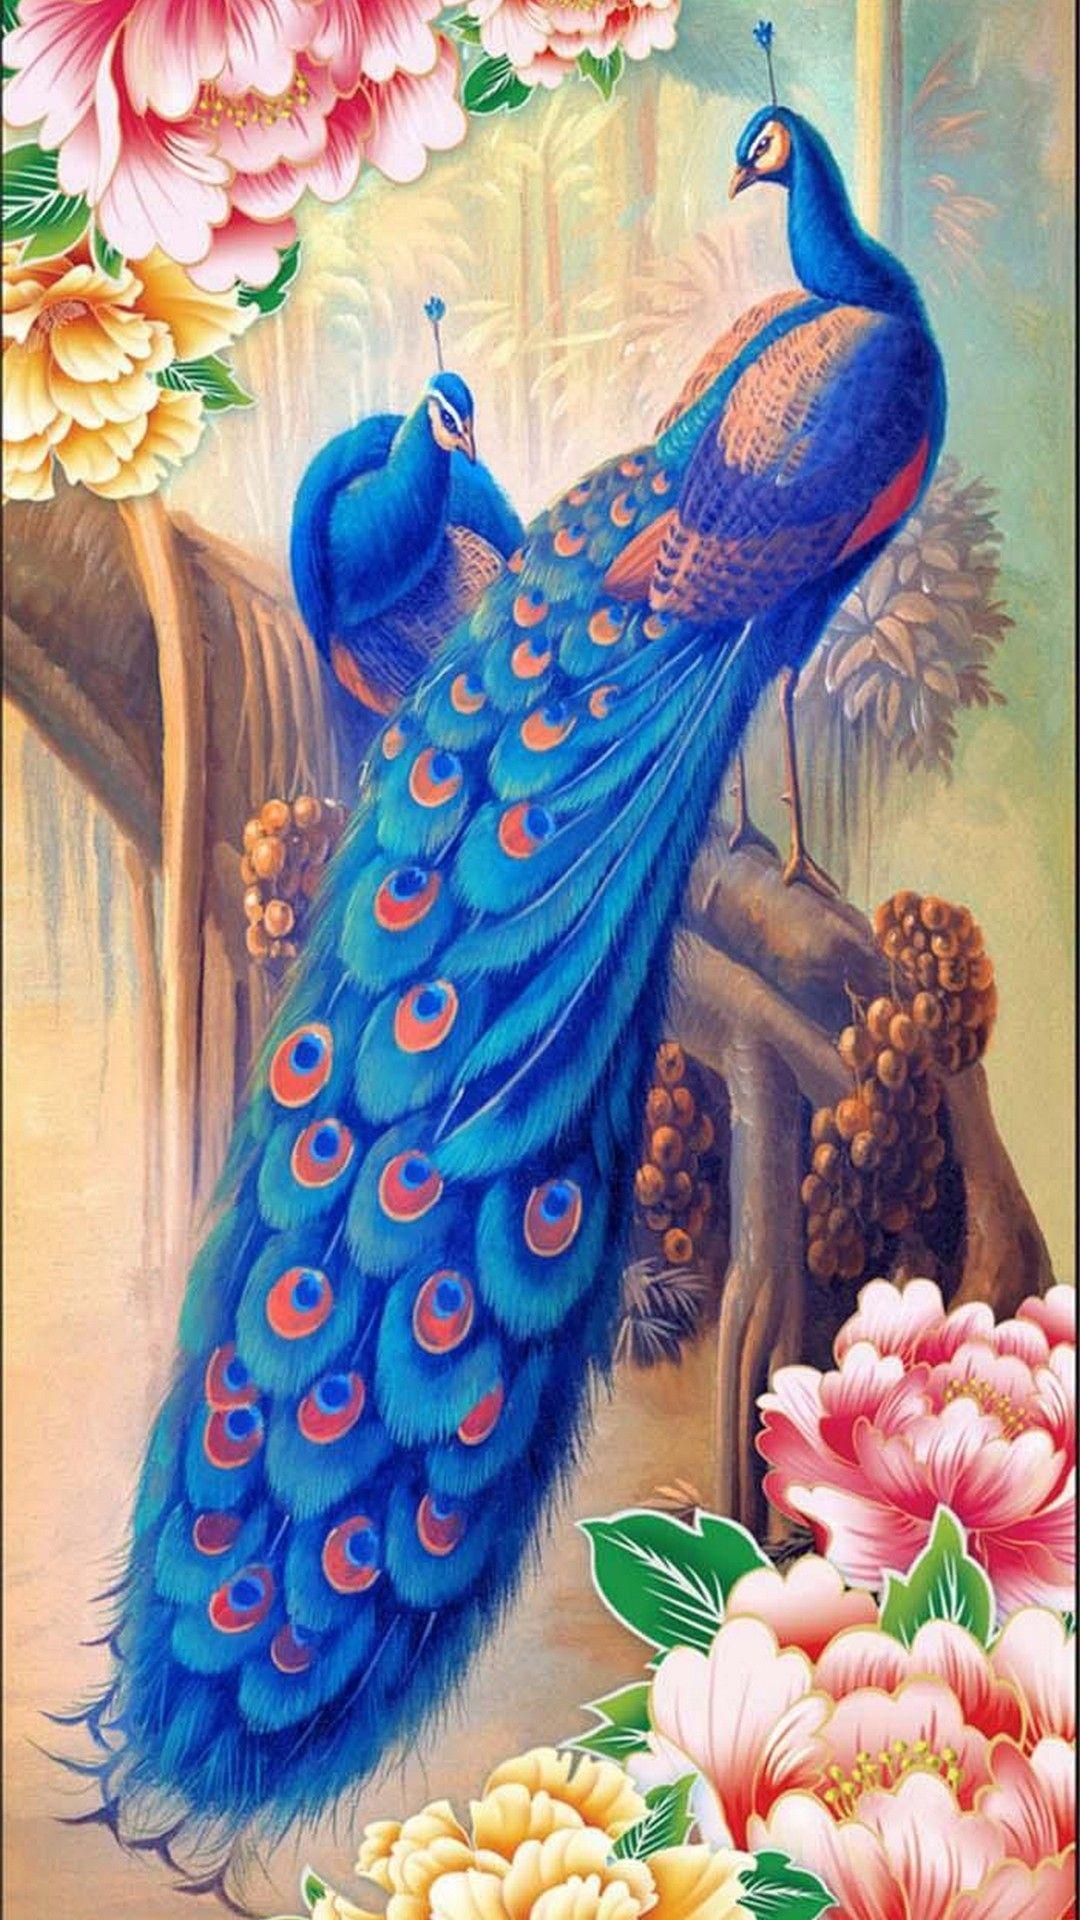 Beauty Peacock Wallpaper For Mobile. Best HD Wallpaper. Peacock